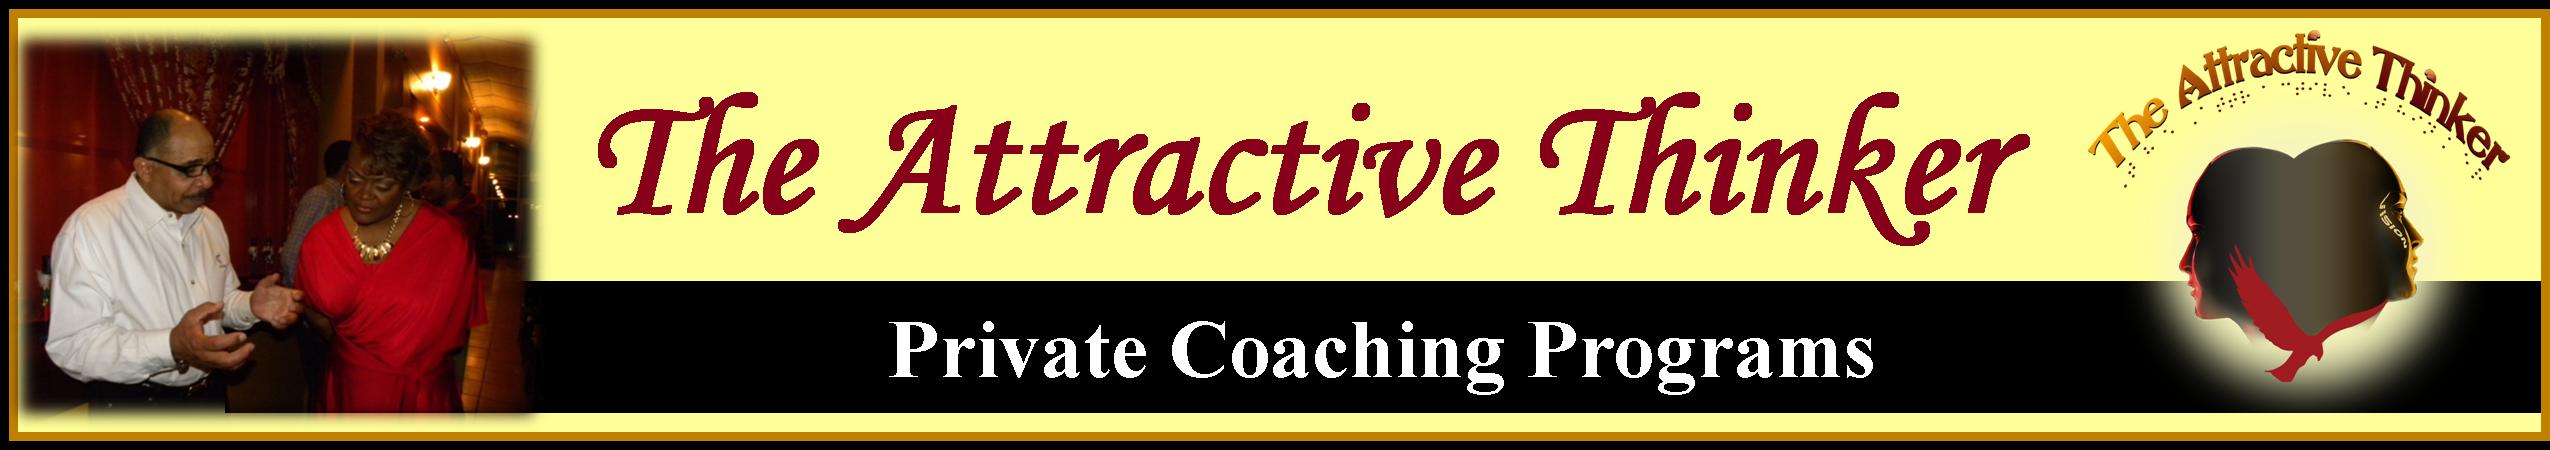 Private Coaching Program Client Request